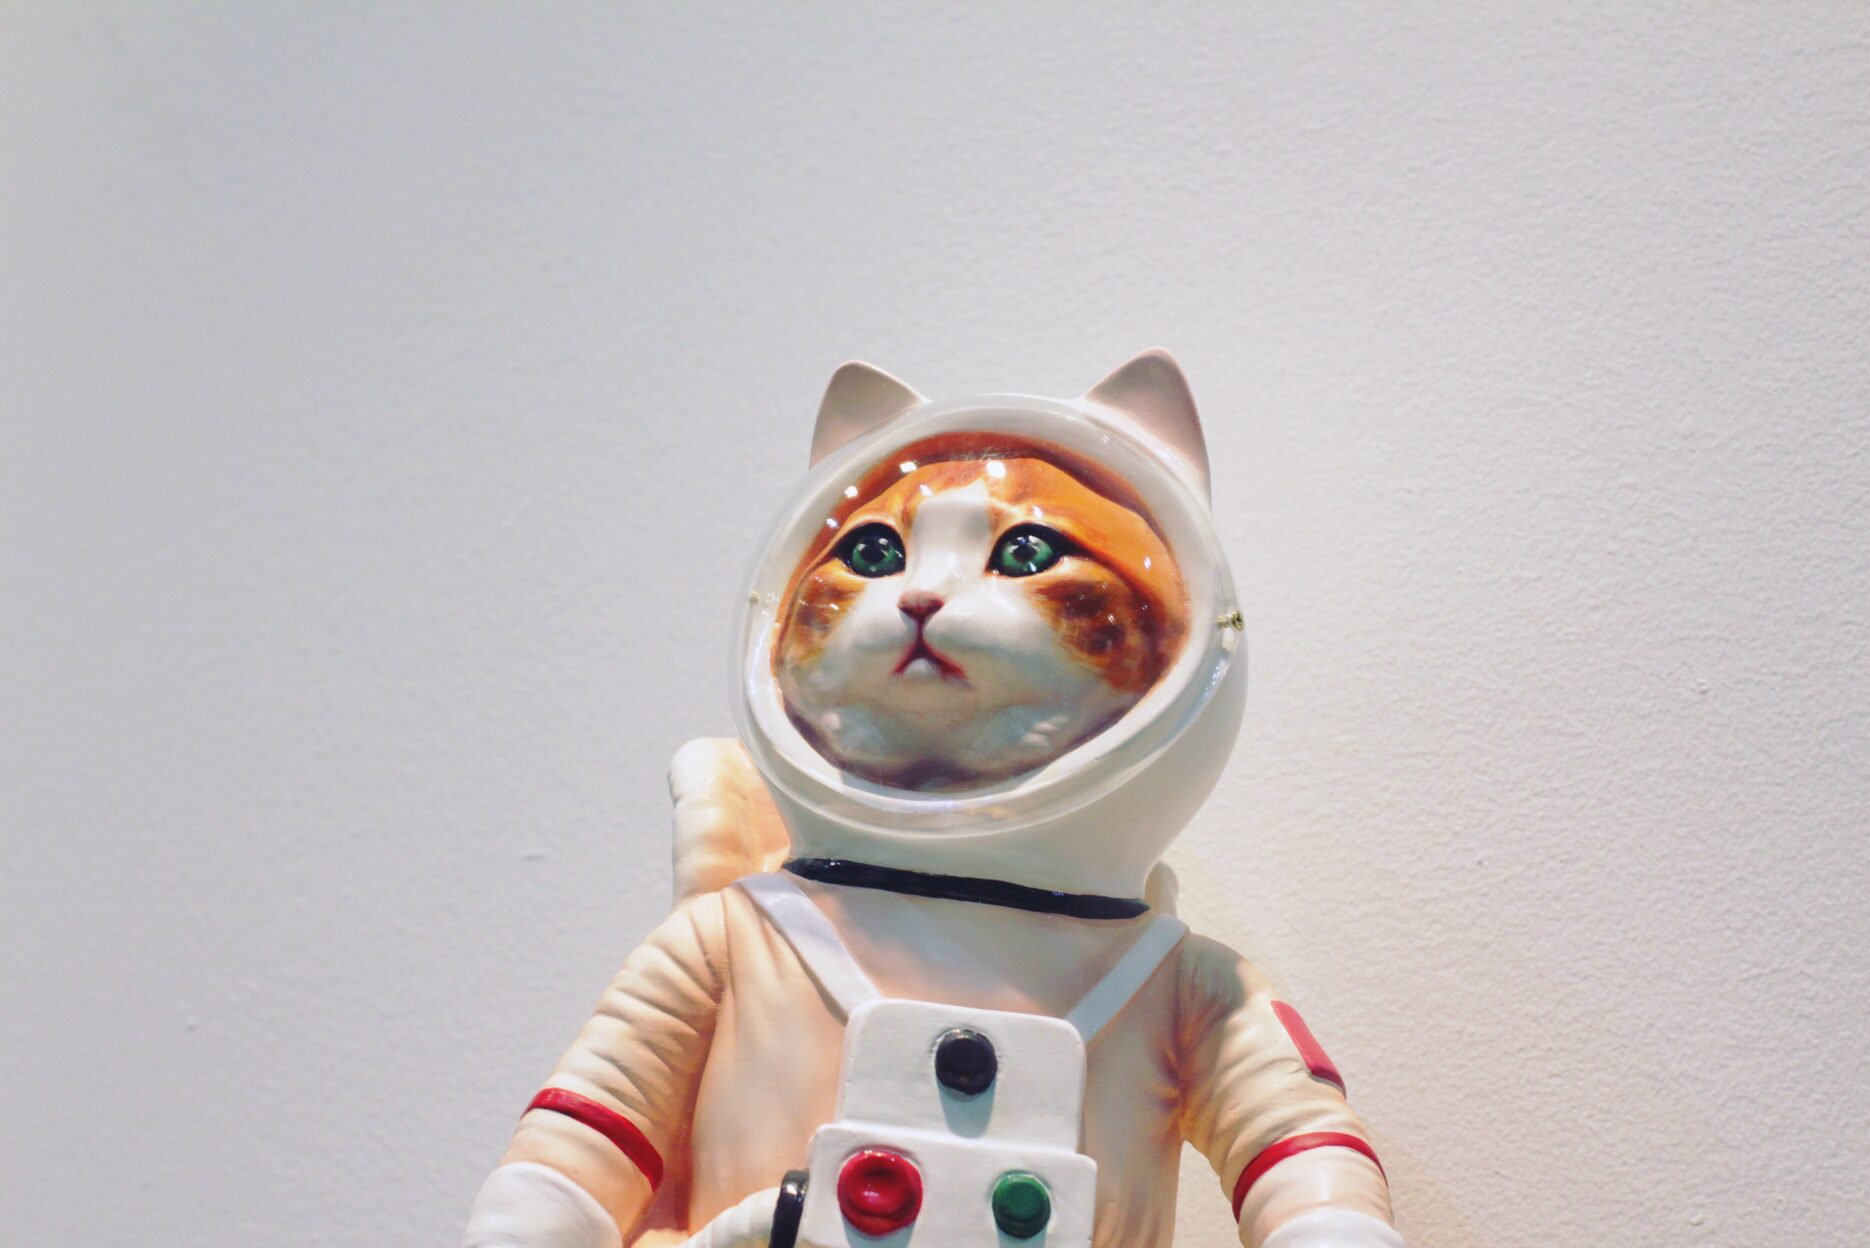 A figurine of a feline astronaut